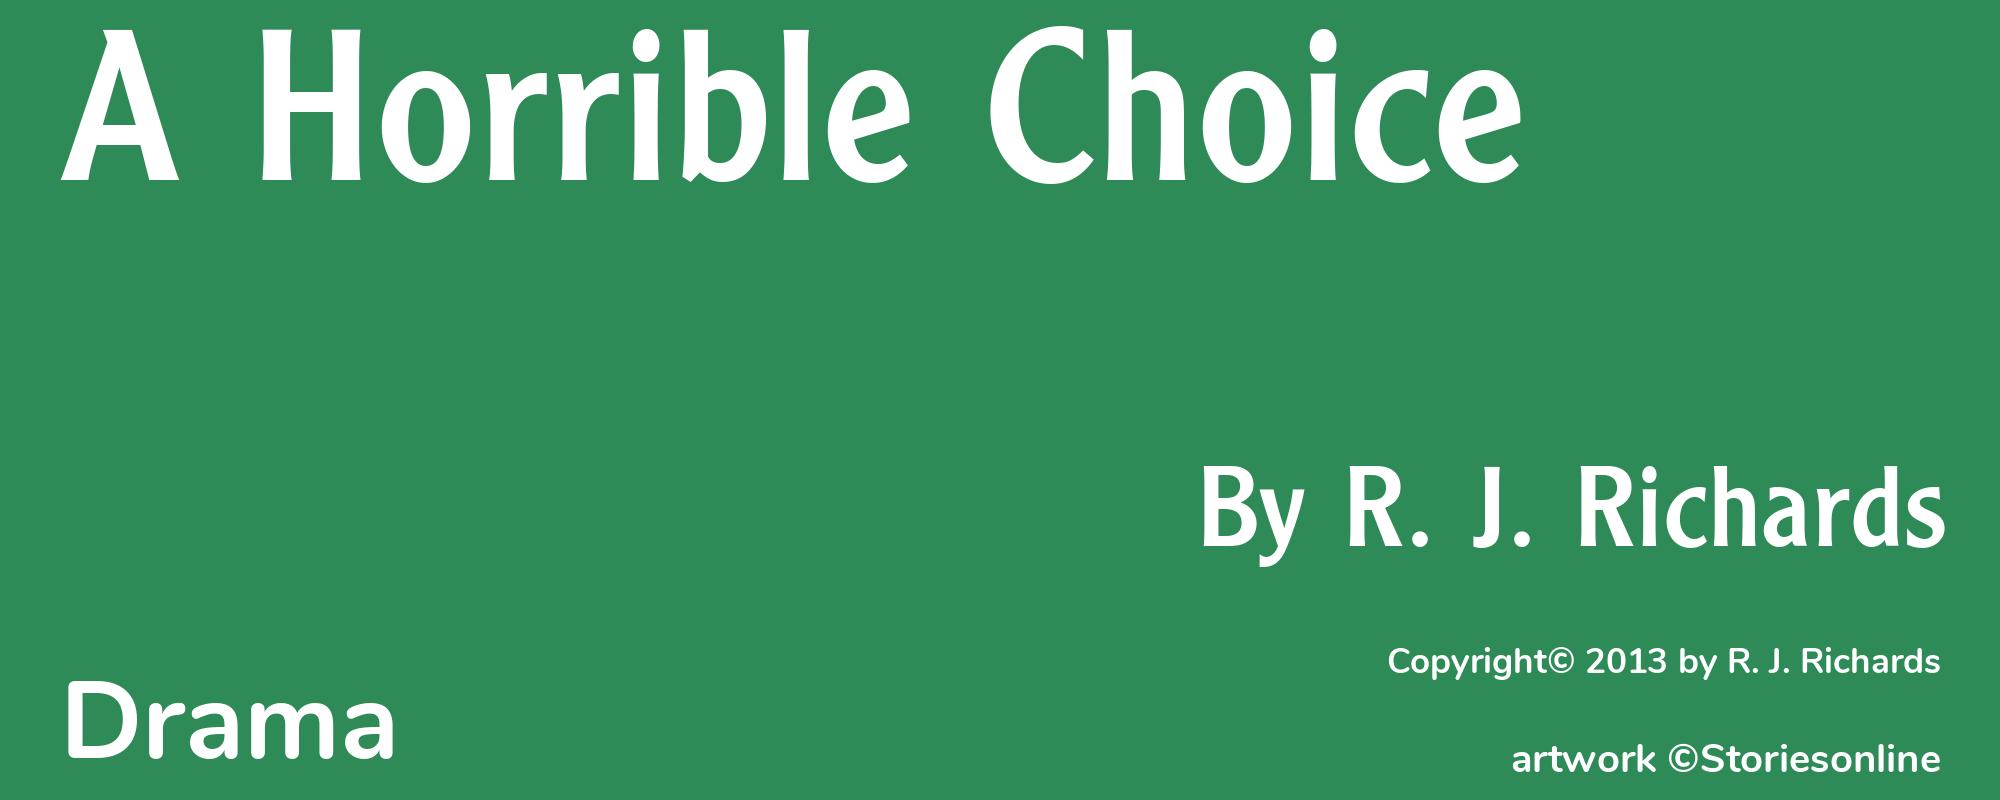 A Horrible Choice - Cover